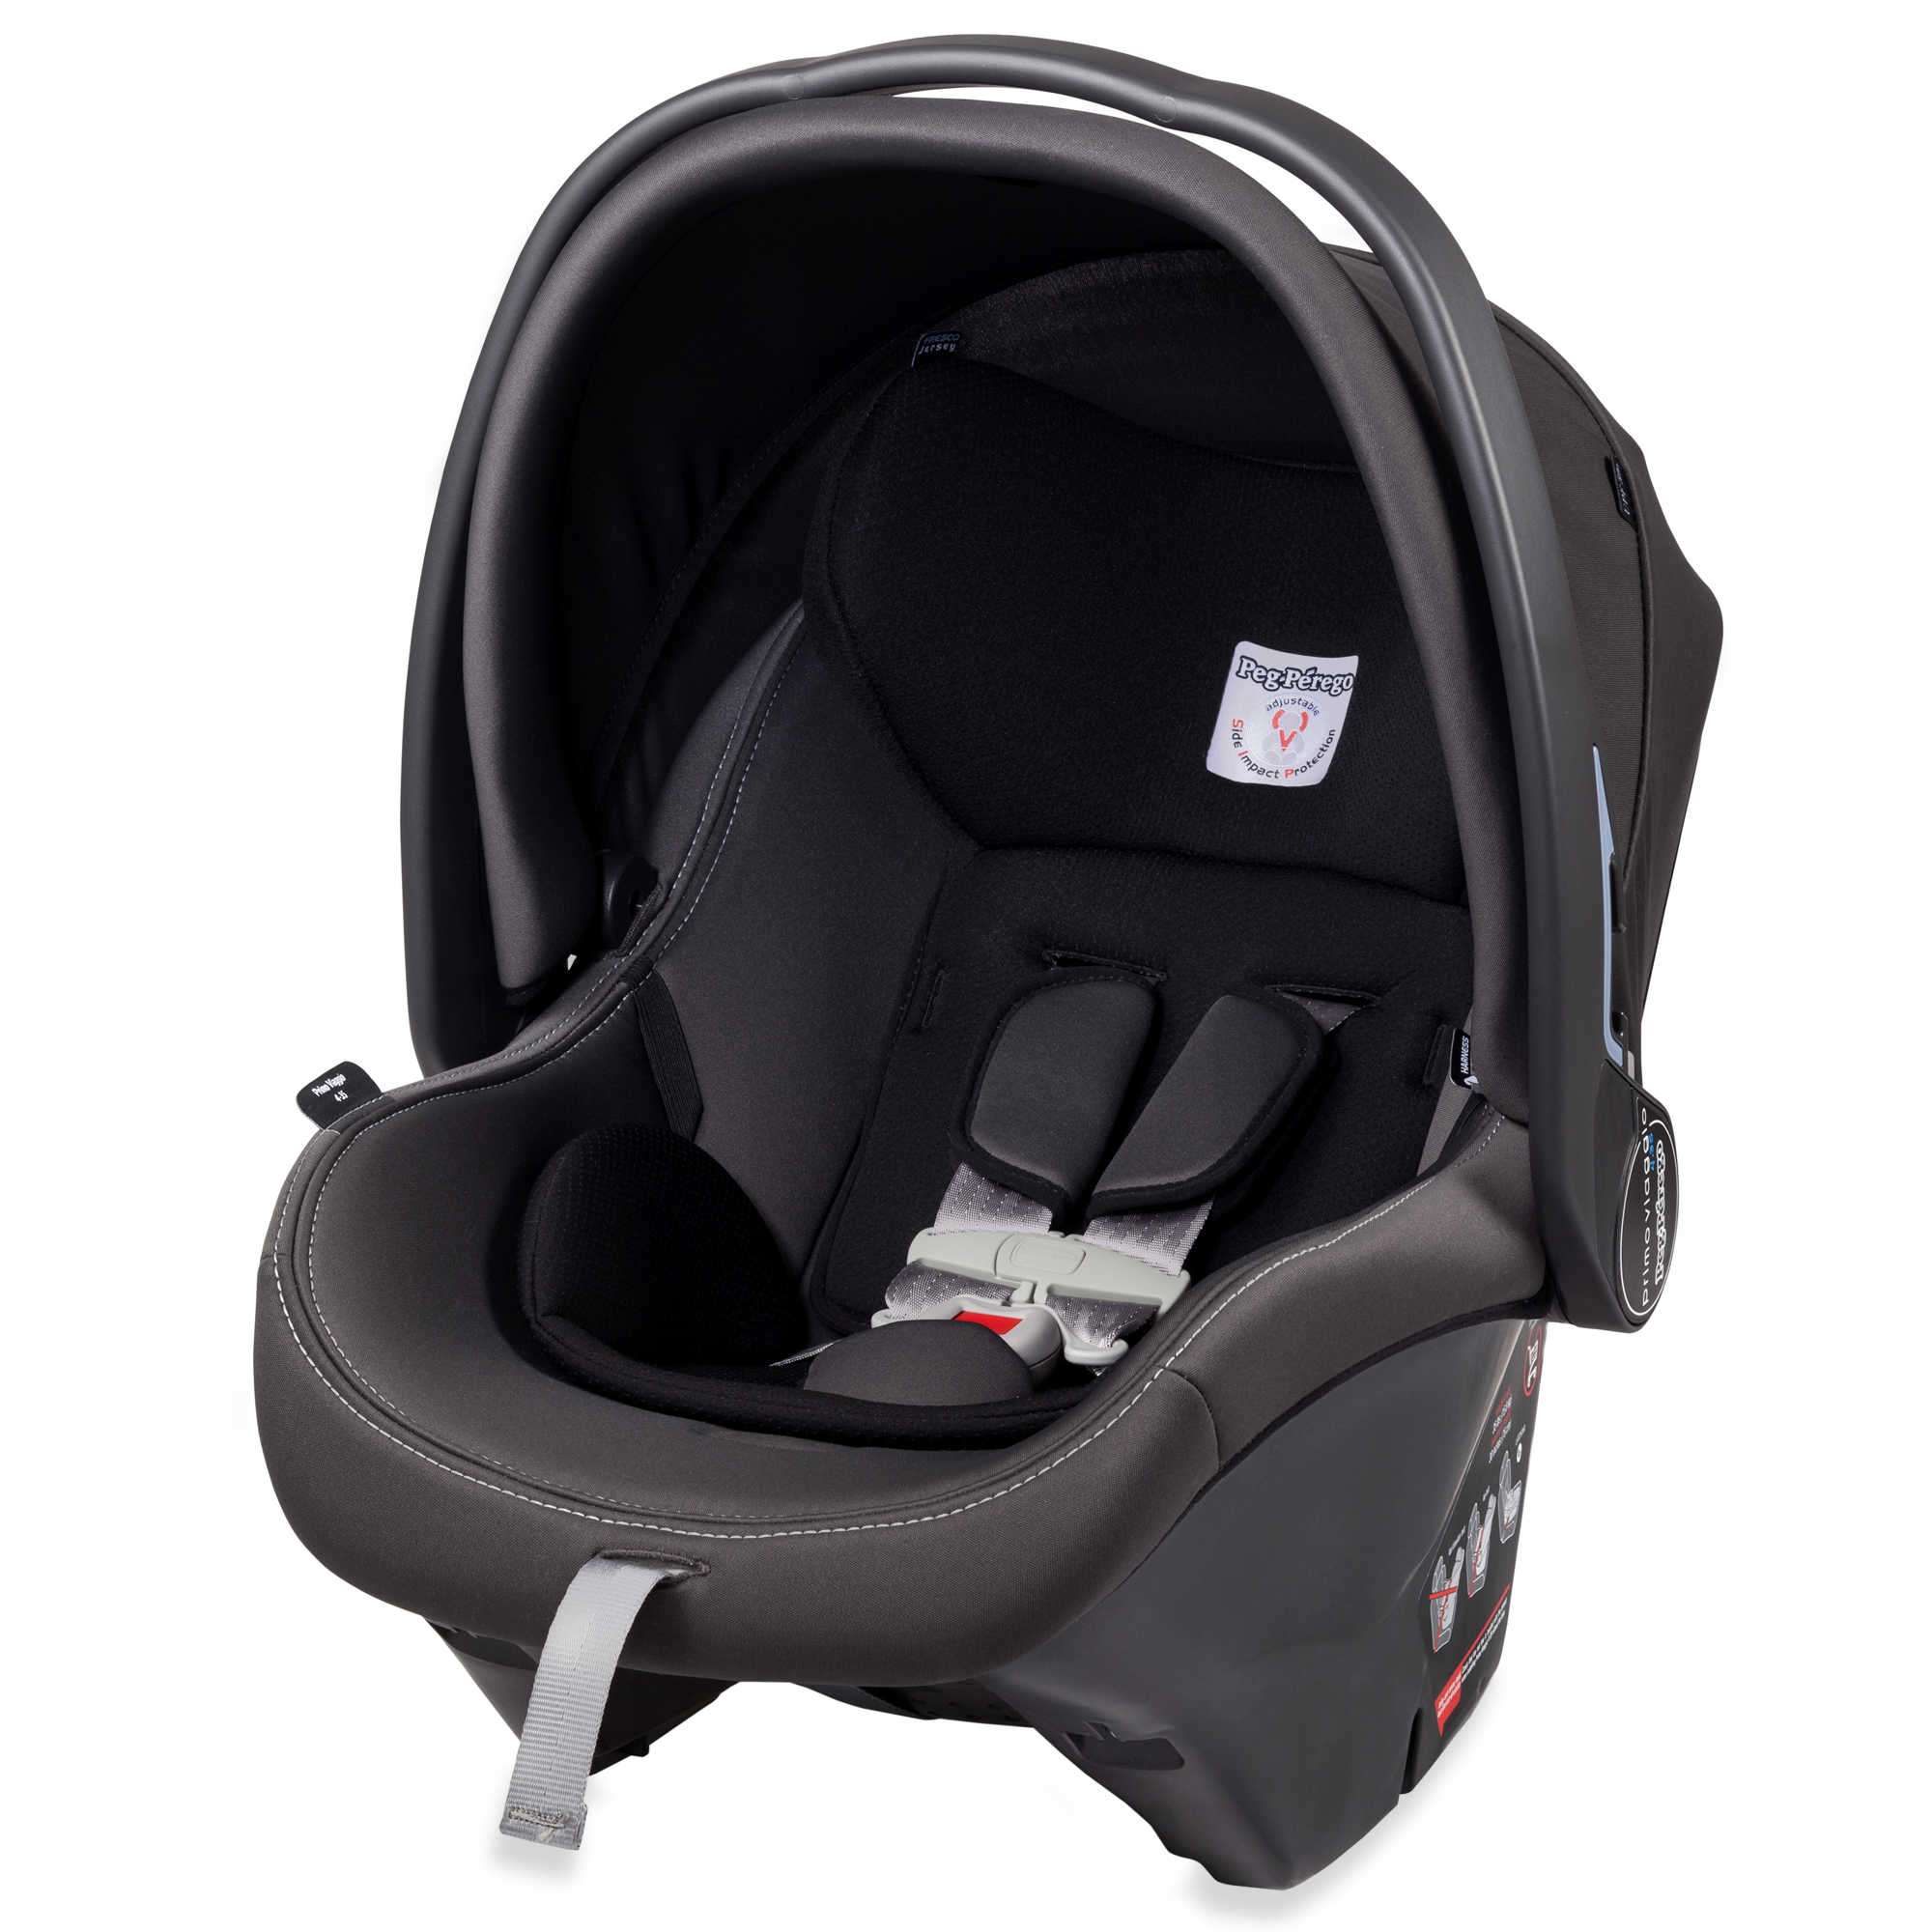 Peg Perego Primo Viaggio 4/35 Infant Car Seat Review